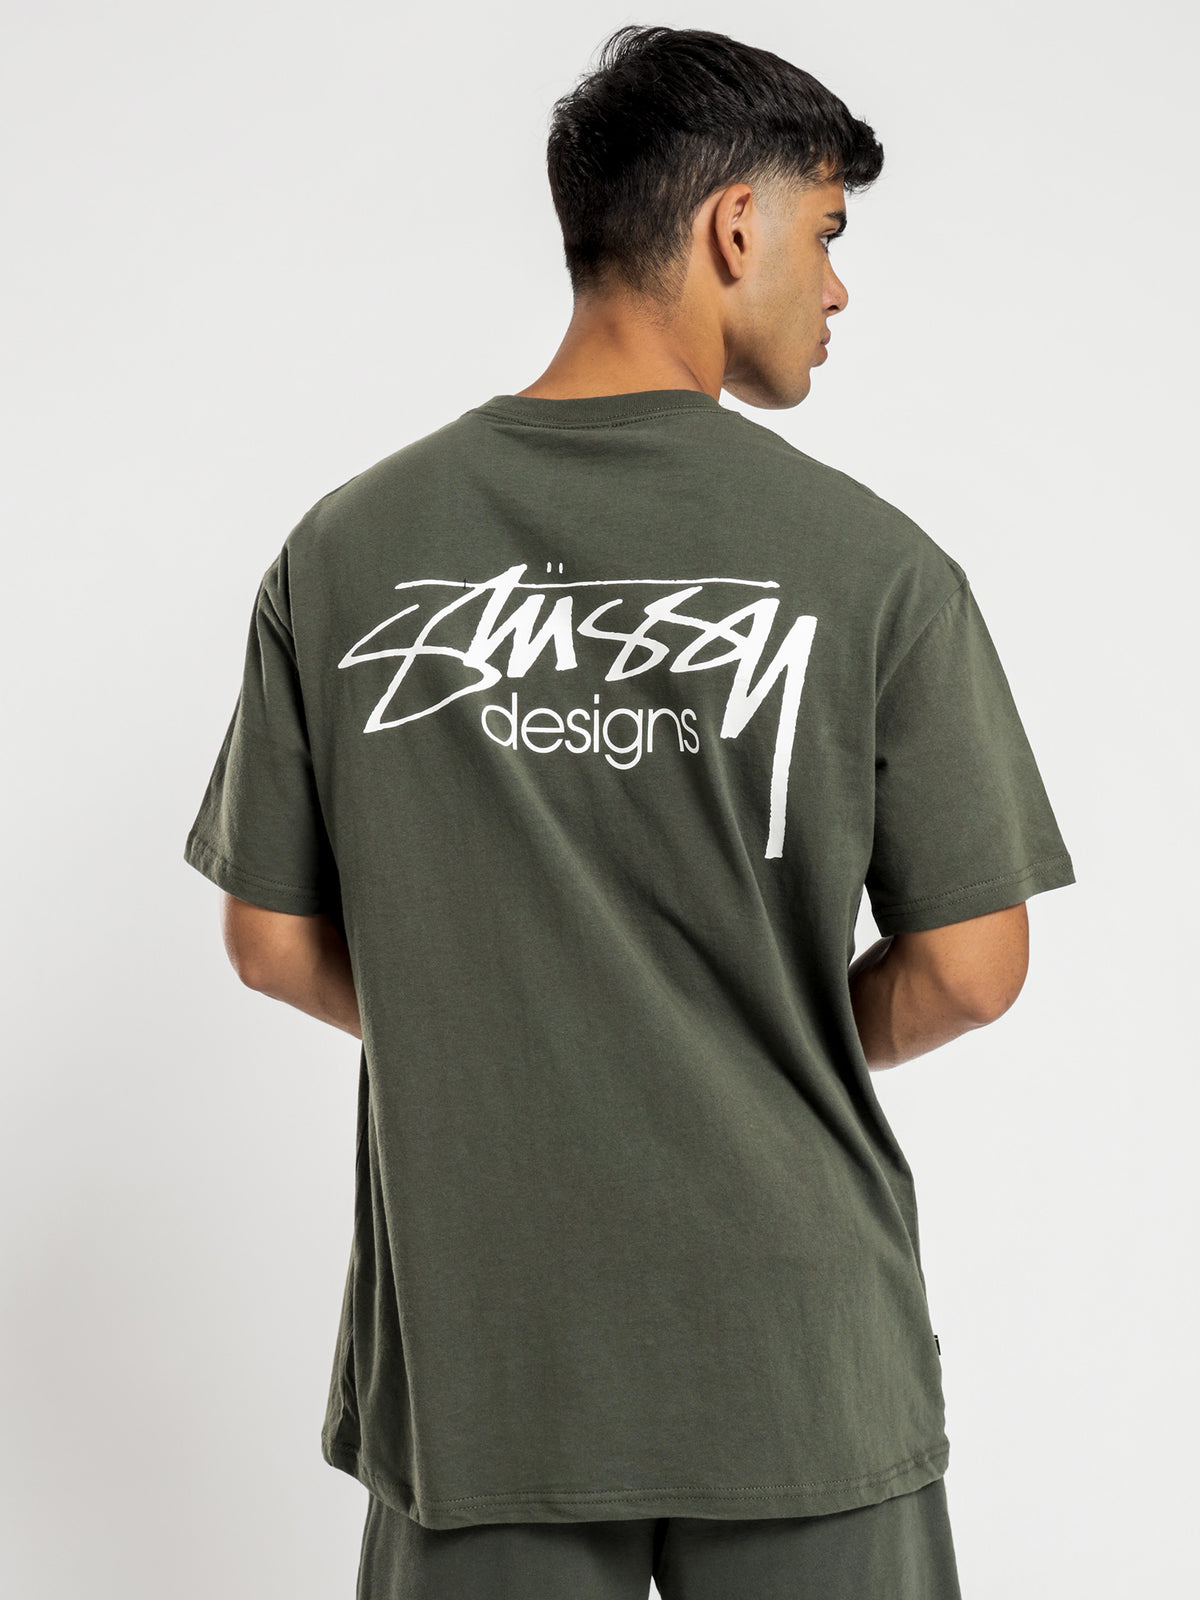 Designs T-Shirt in Flight Green